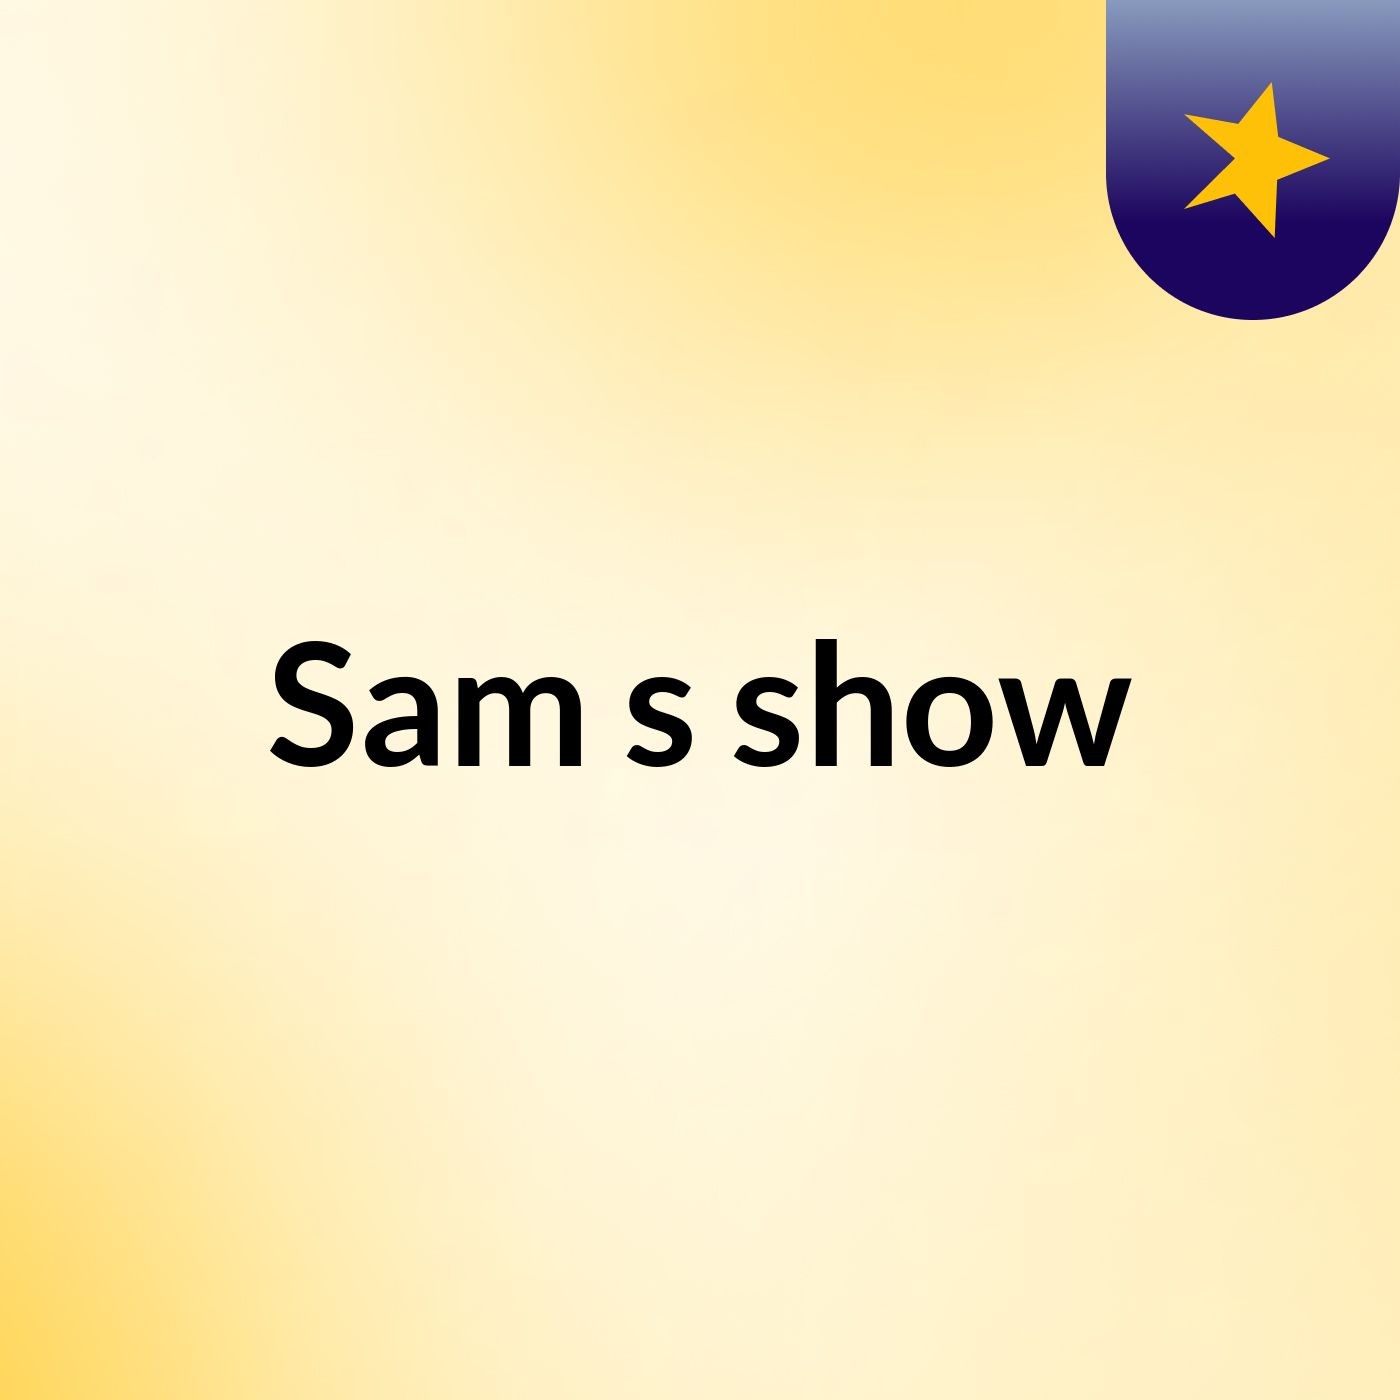 Sam's show